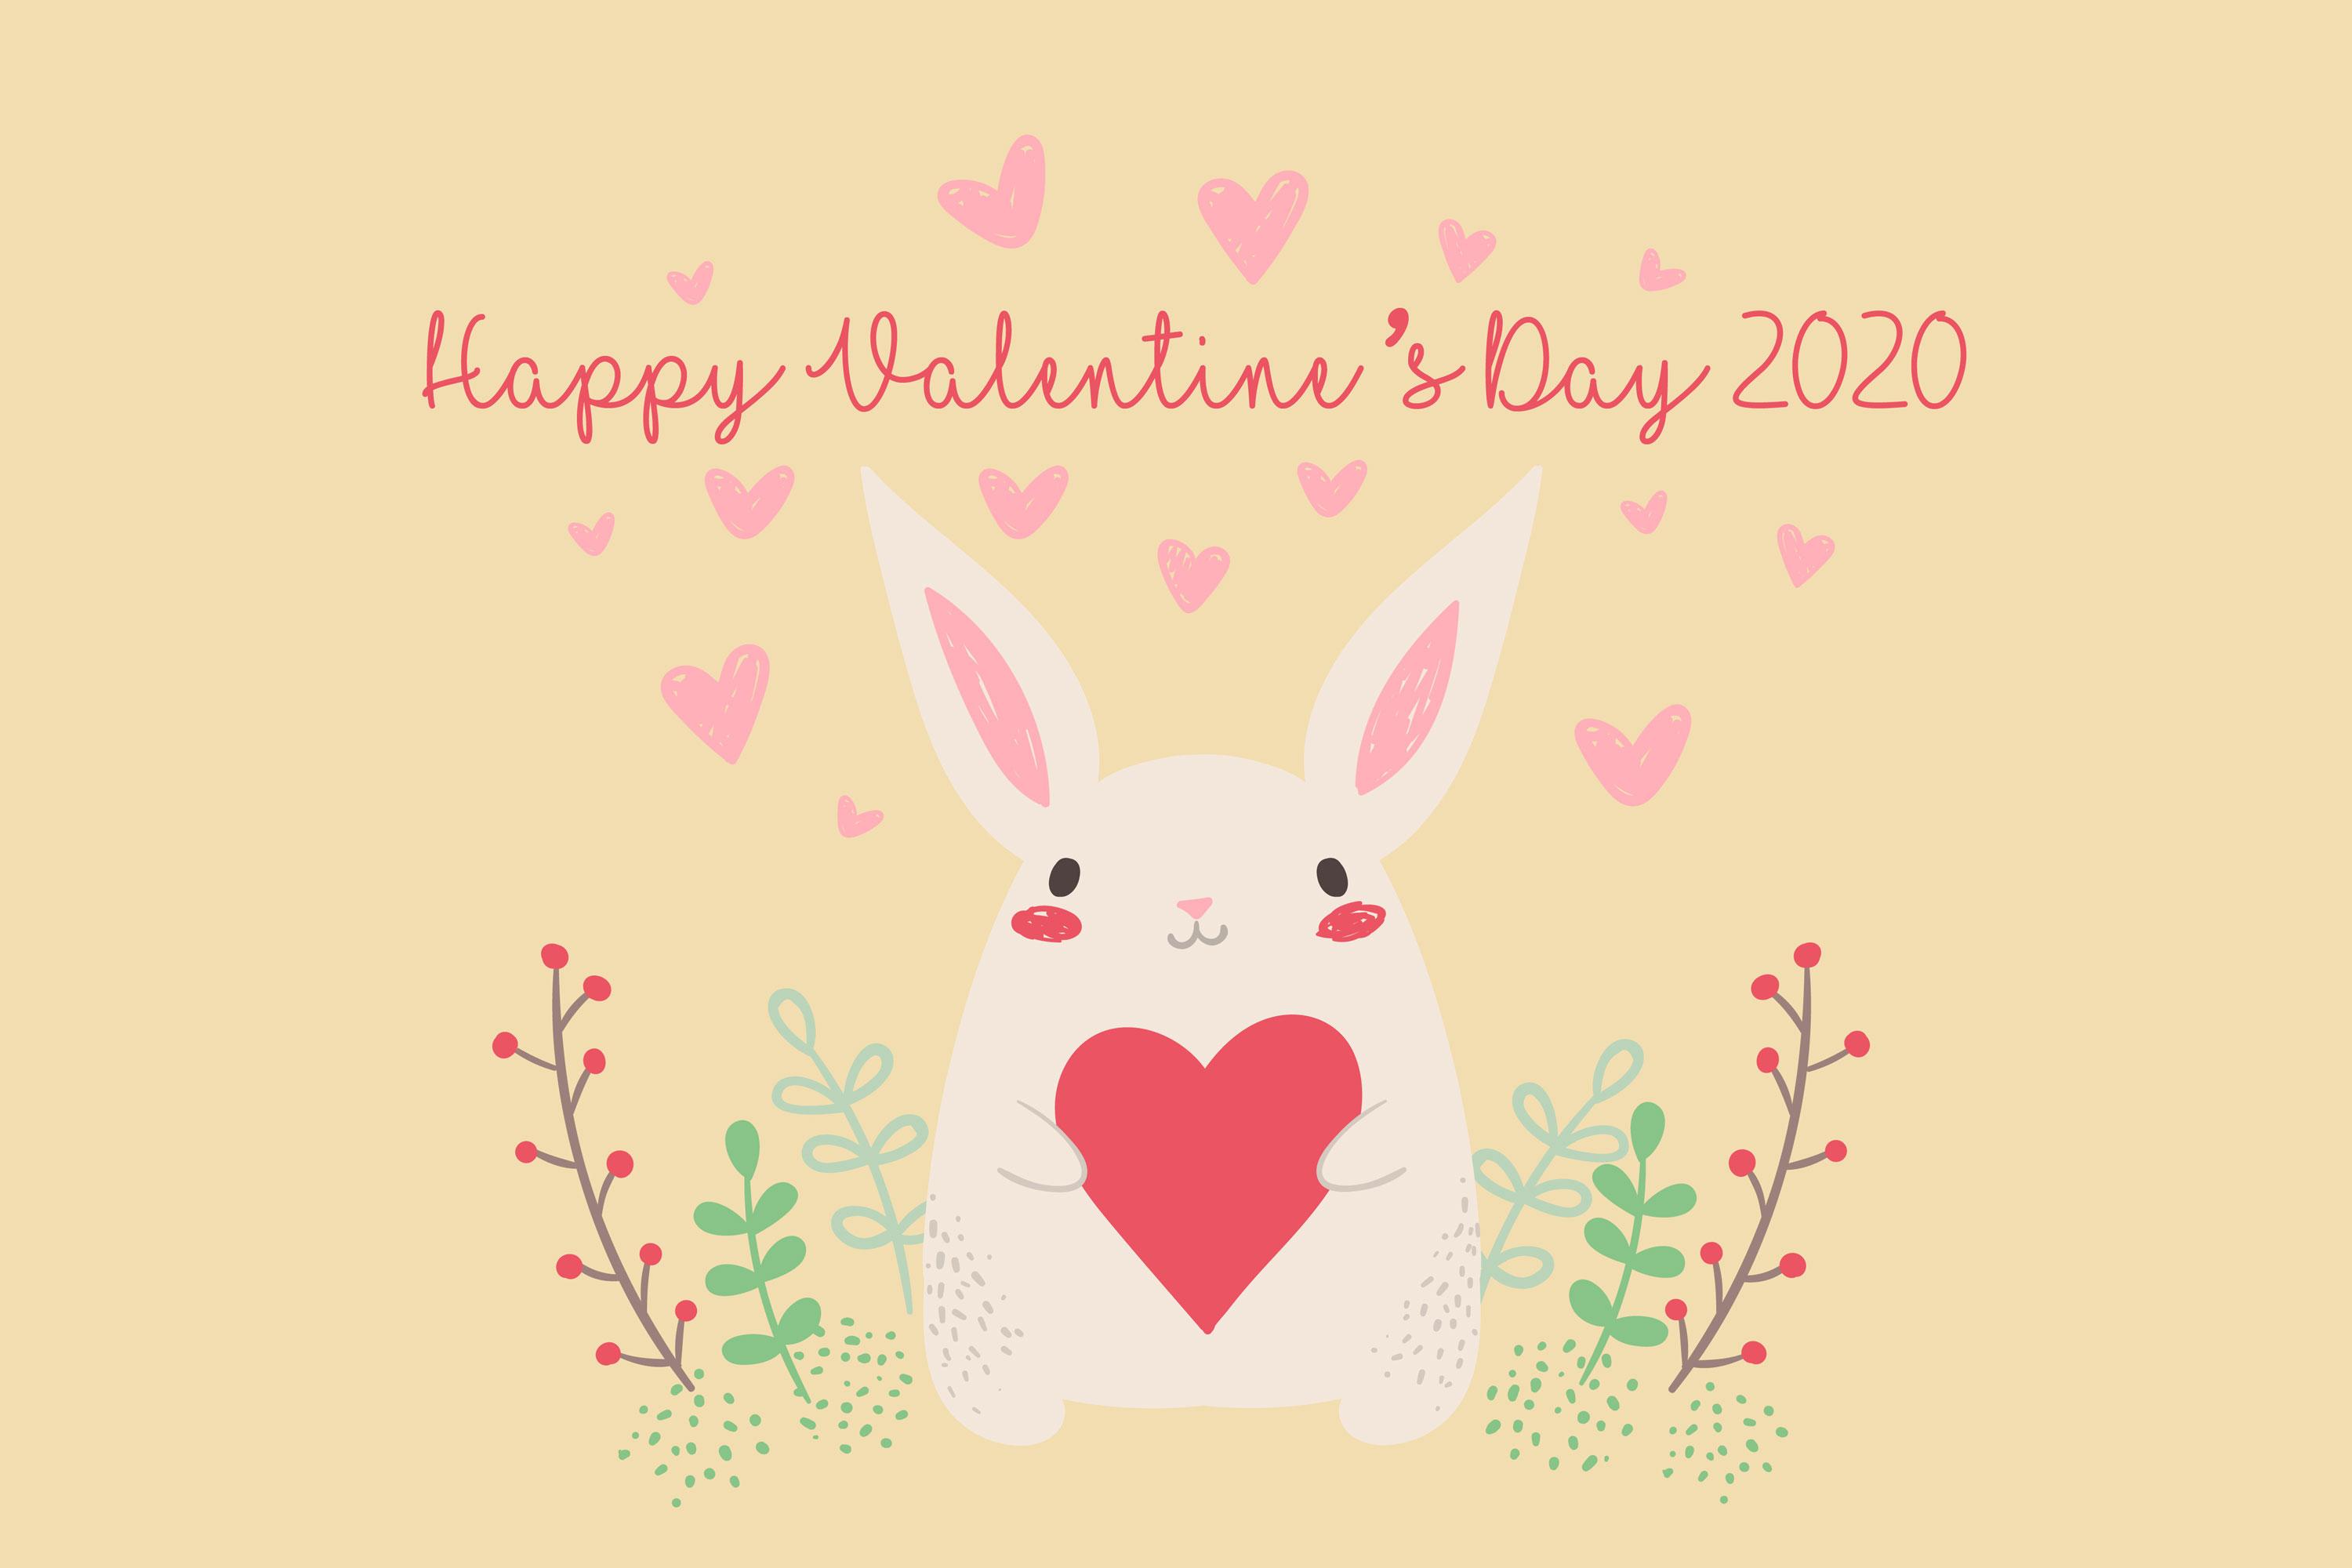 Happy Valentine's Day 2020 HD Picture, Image, Wallpaper